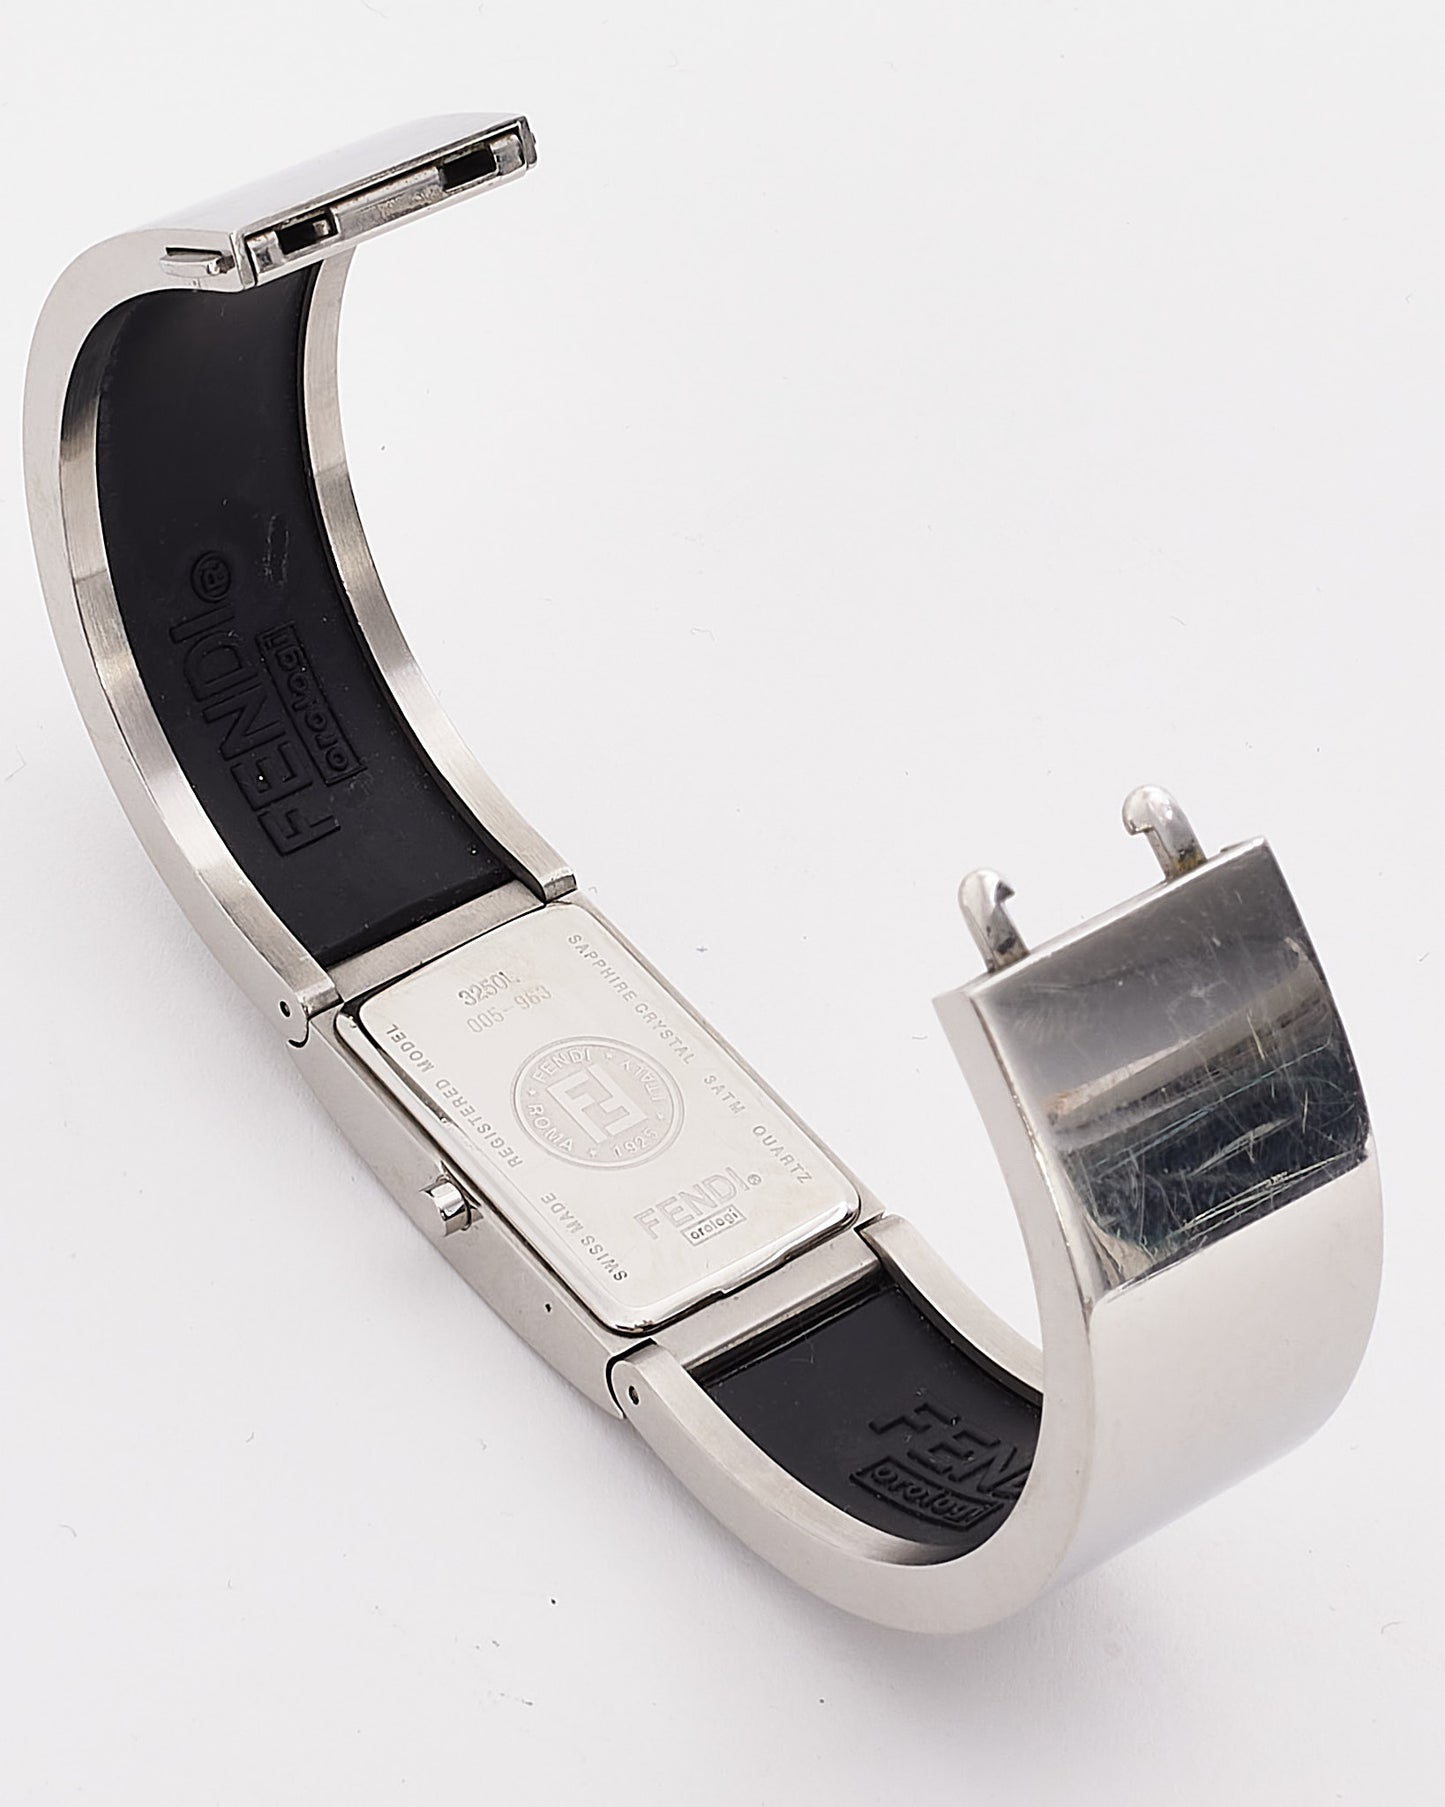 Fendi Silver Sapphire Crystal Quartz 28mm Watch